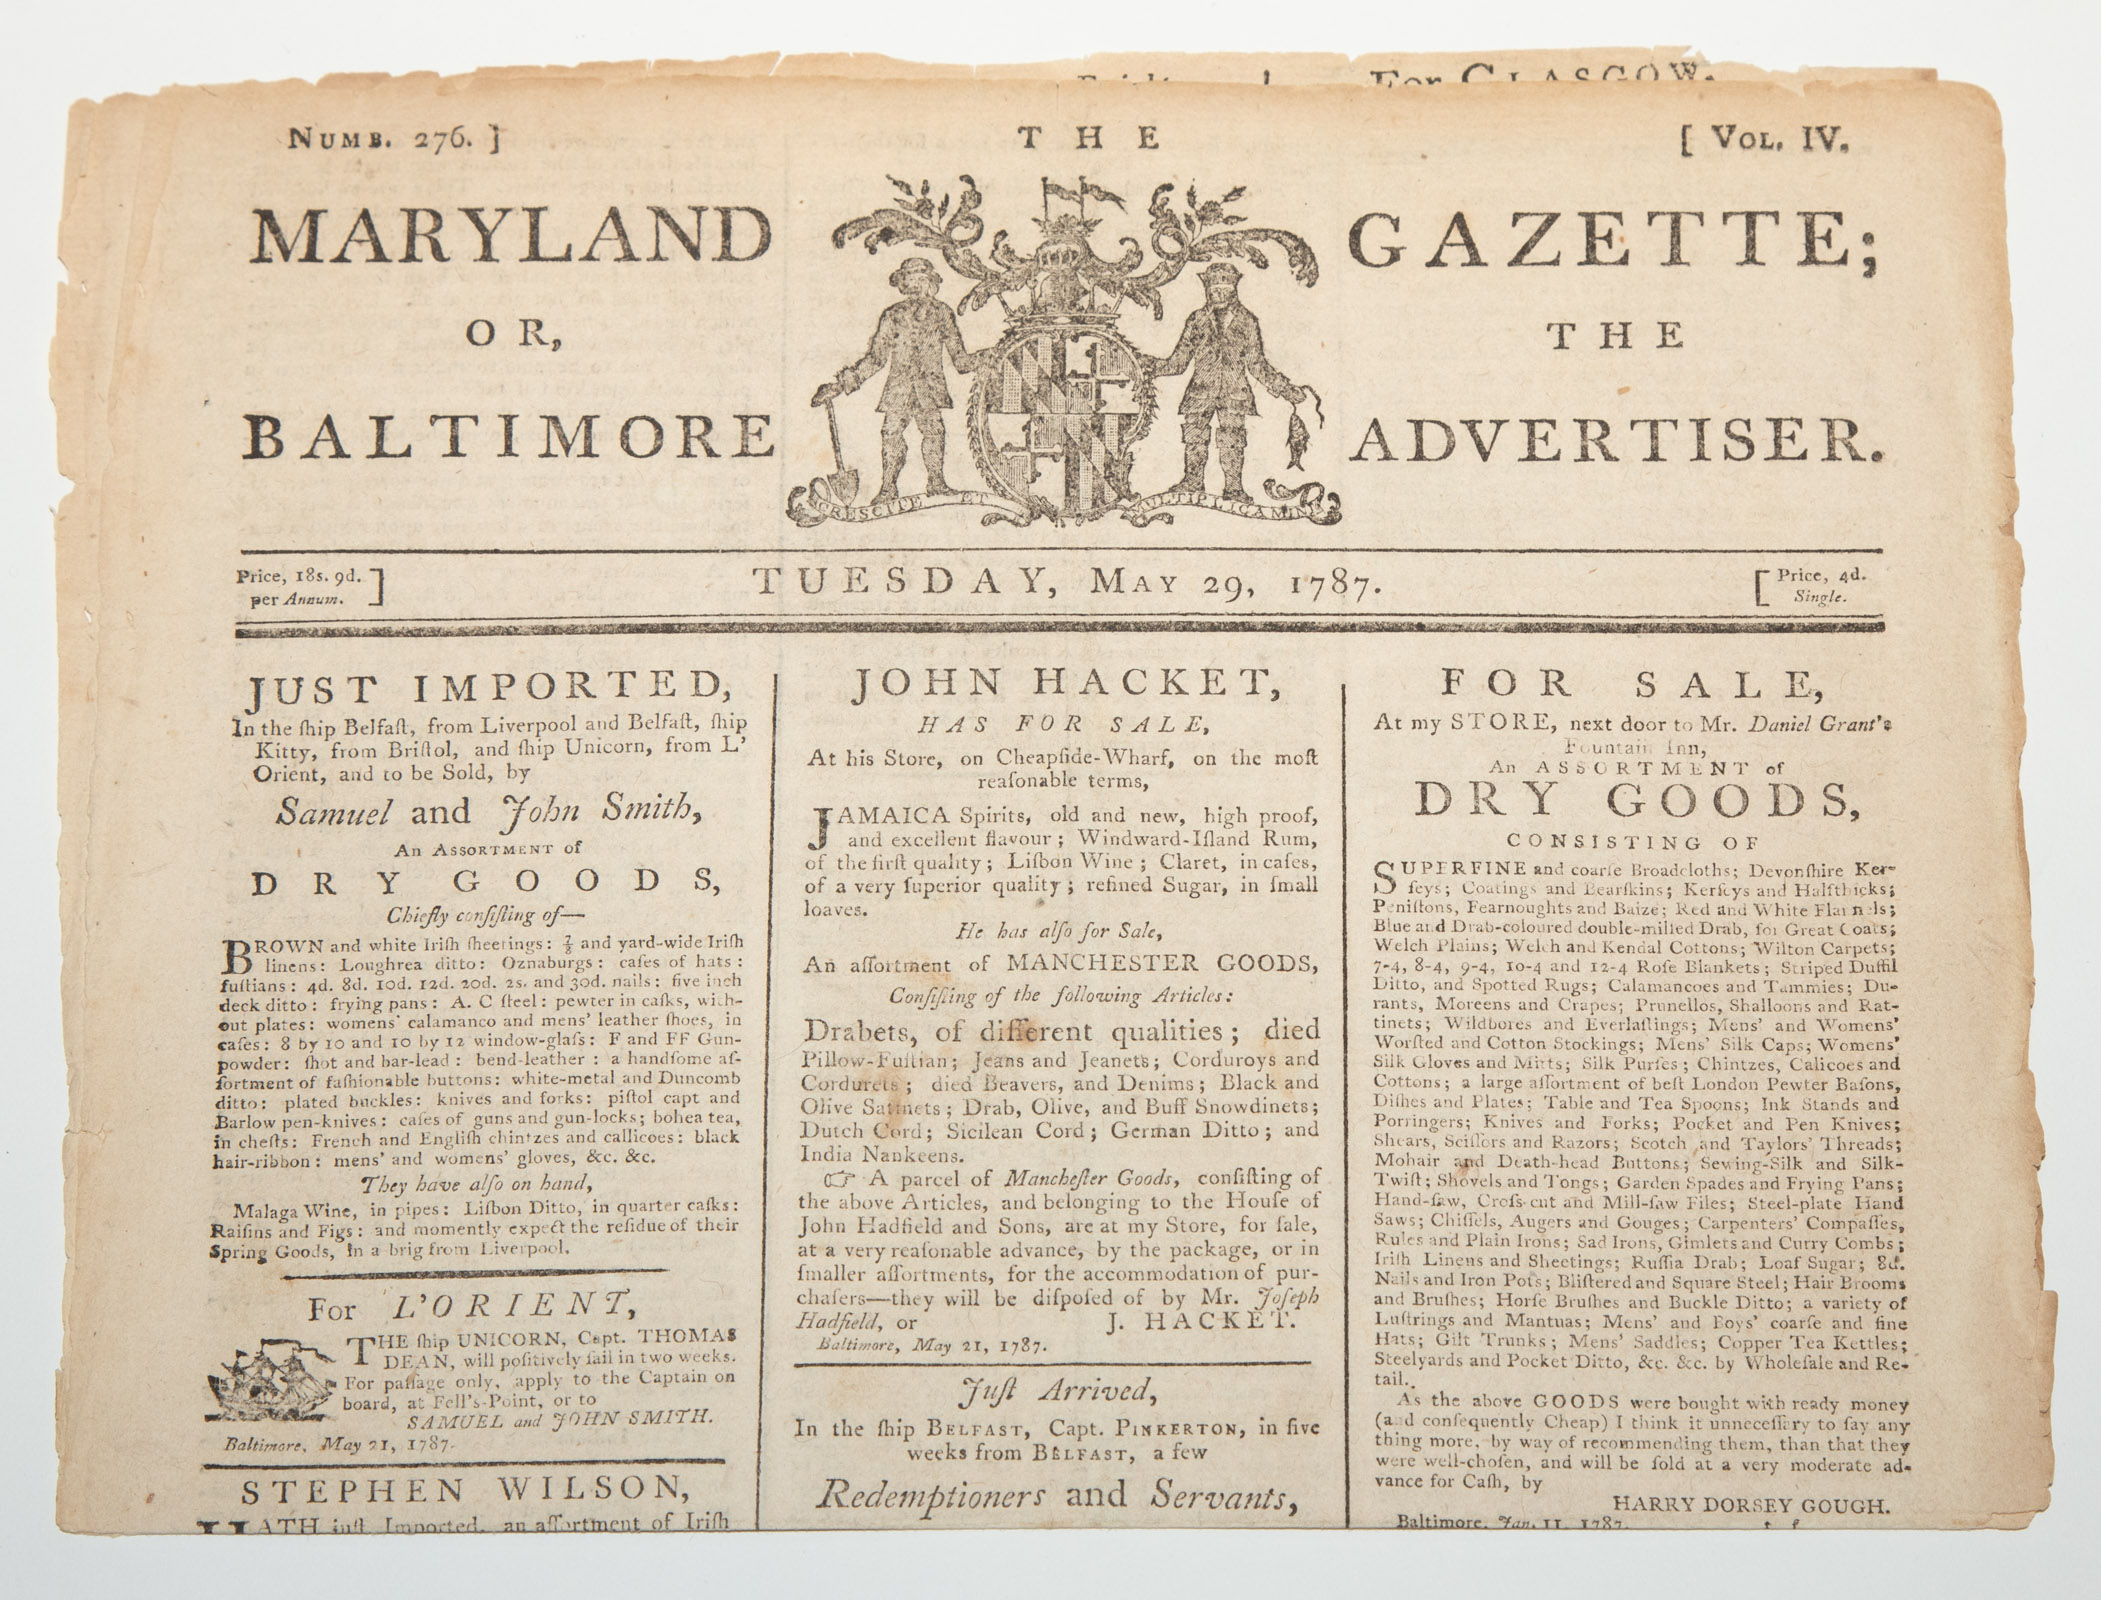 THE MARYLAND GAZETTE, MAY 29, 1787